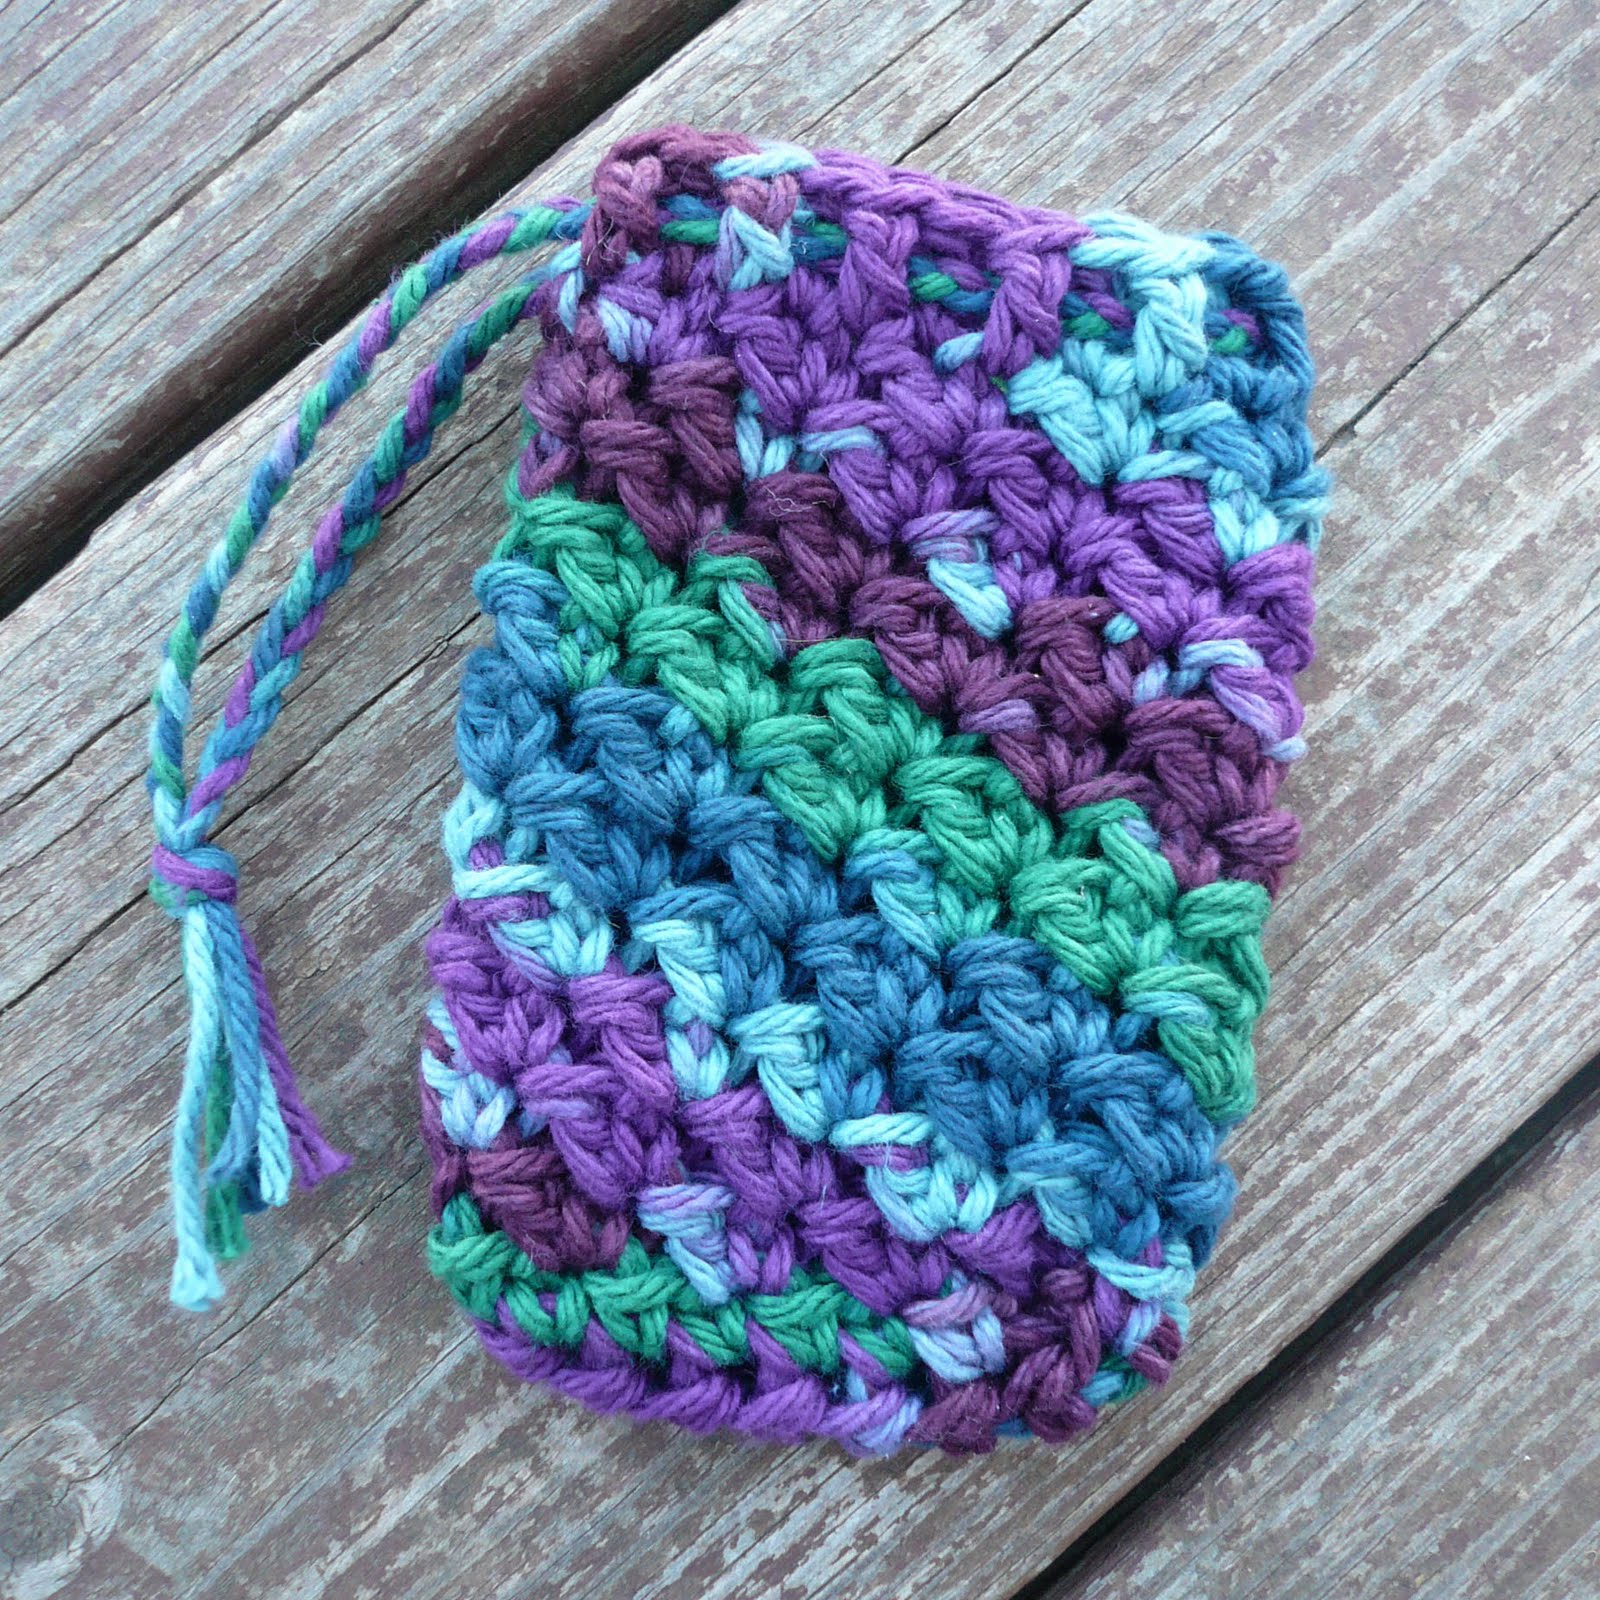 Candle Skirt Crochet Pattern - Free Crochet Pattern Courtesy of